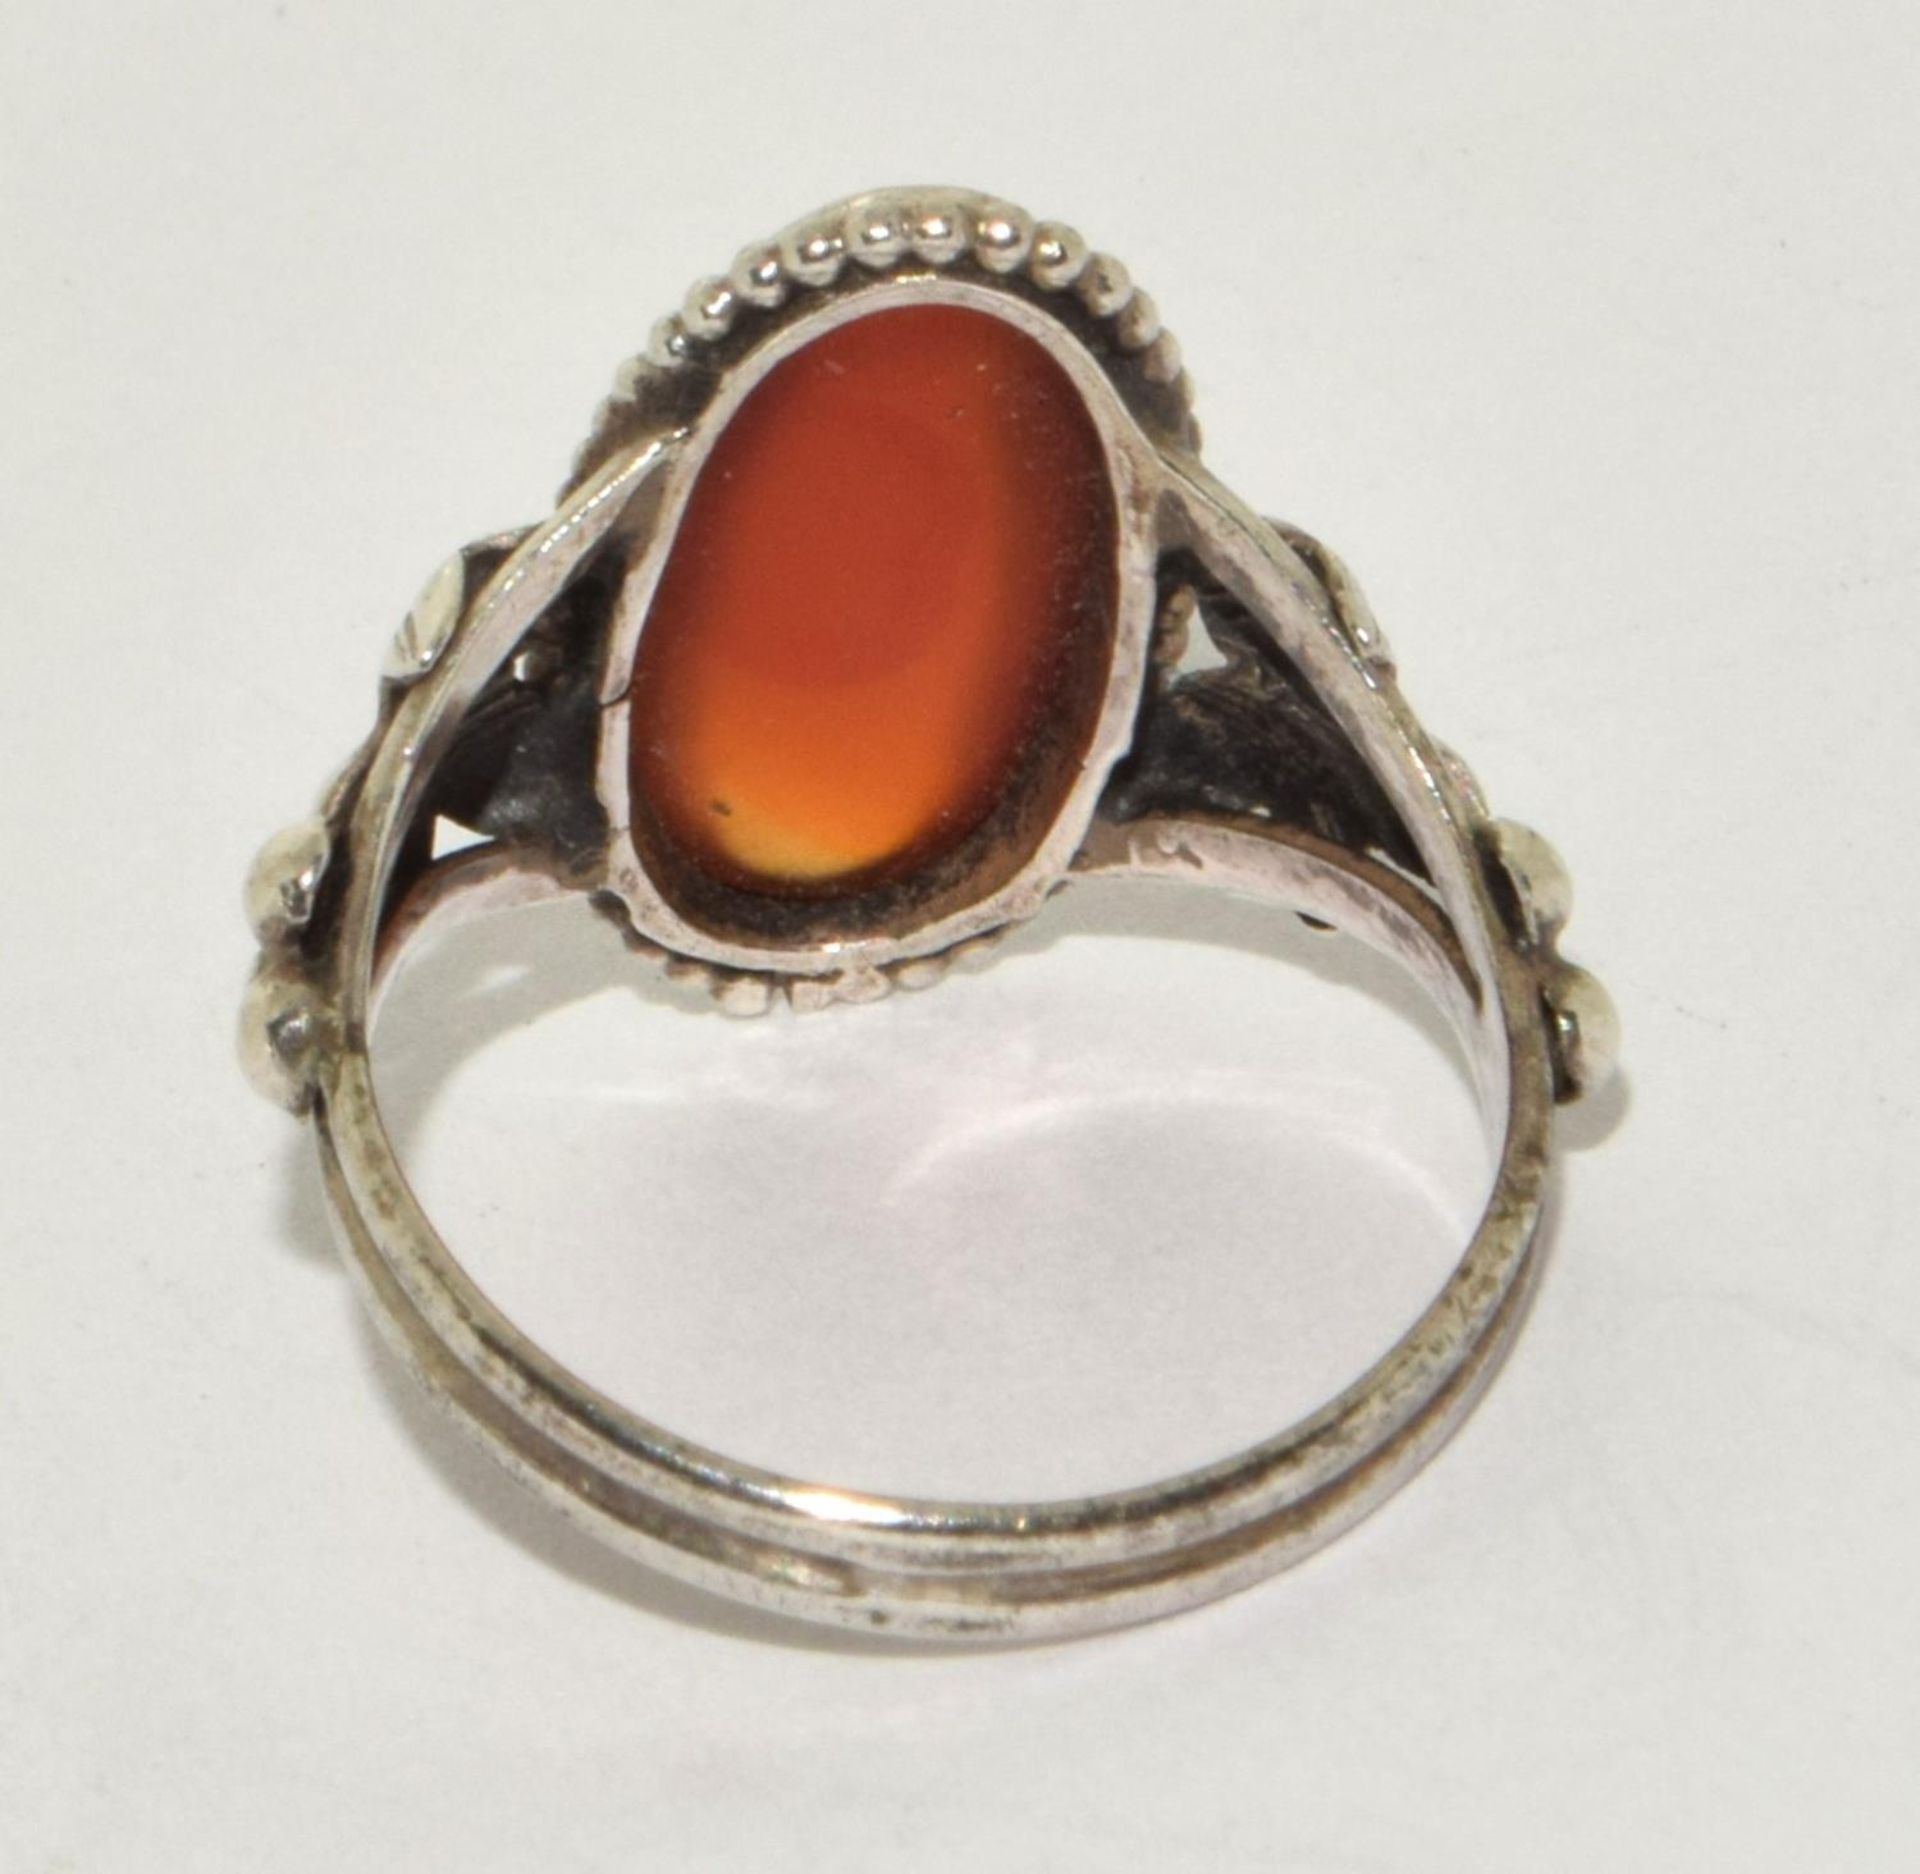 Antique Cornelian 935 silver ring size M - Image 3 of 3